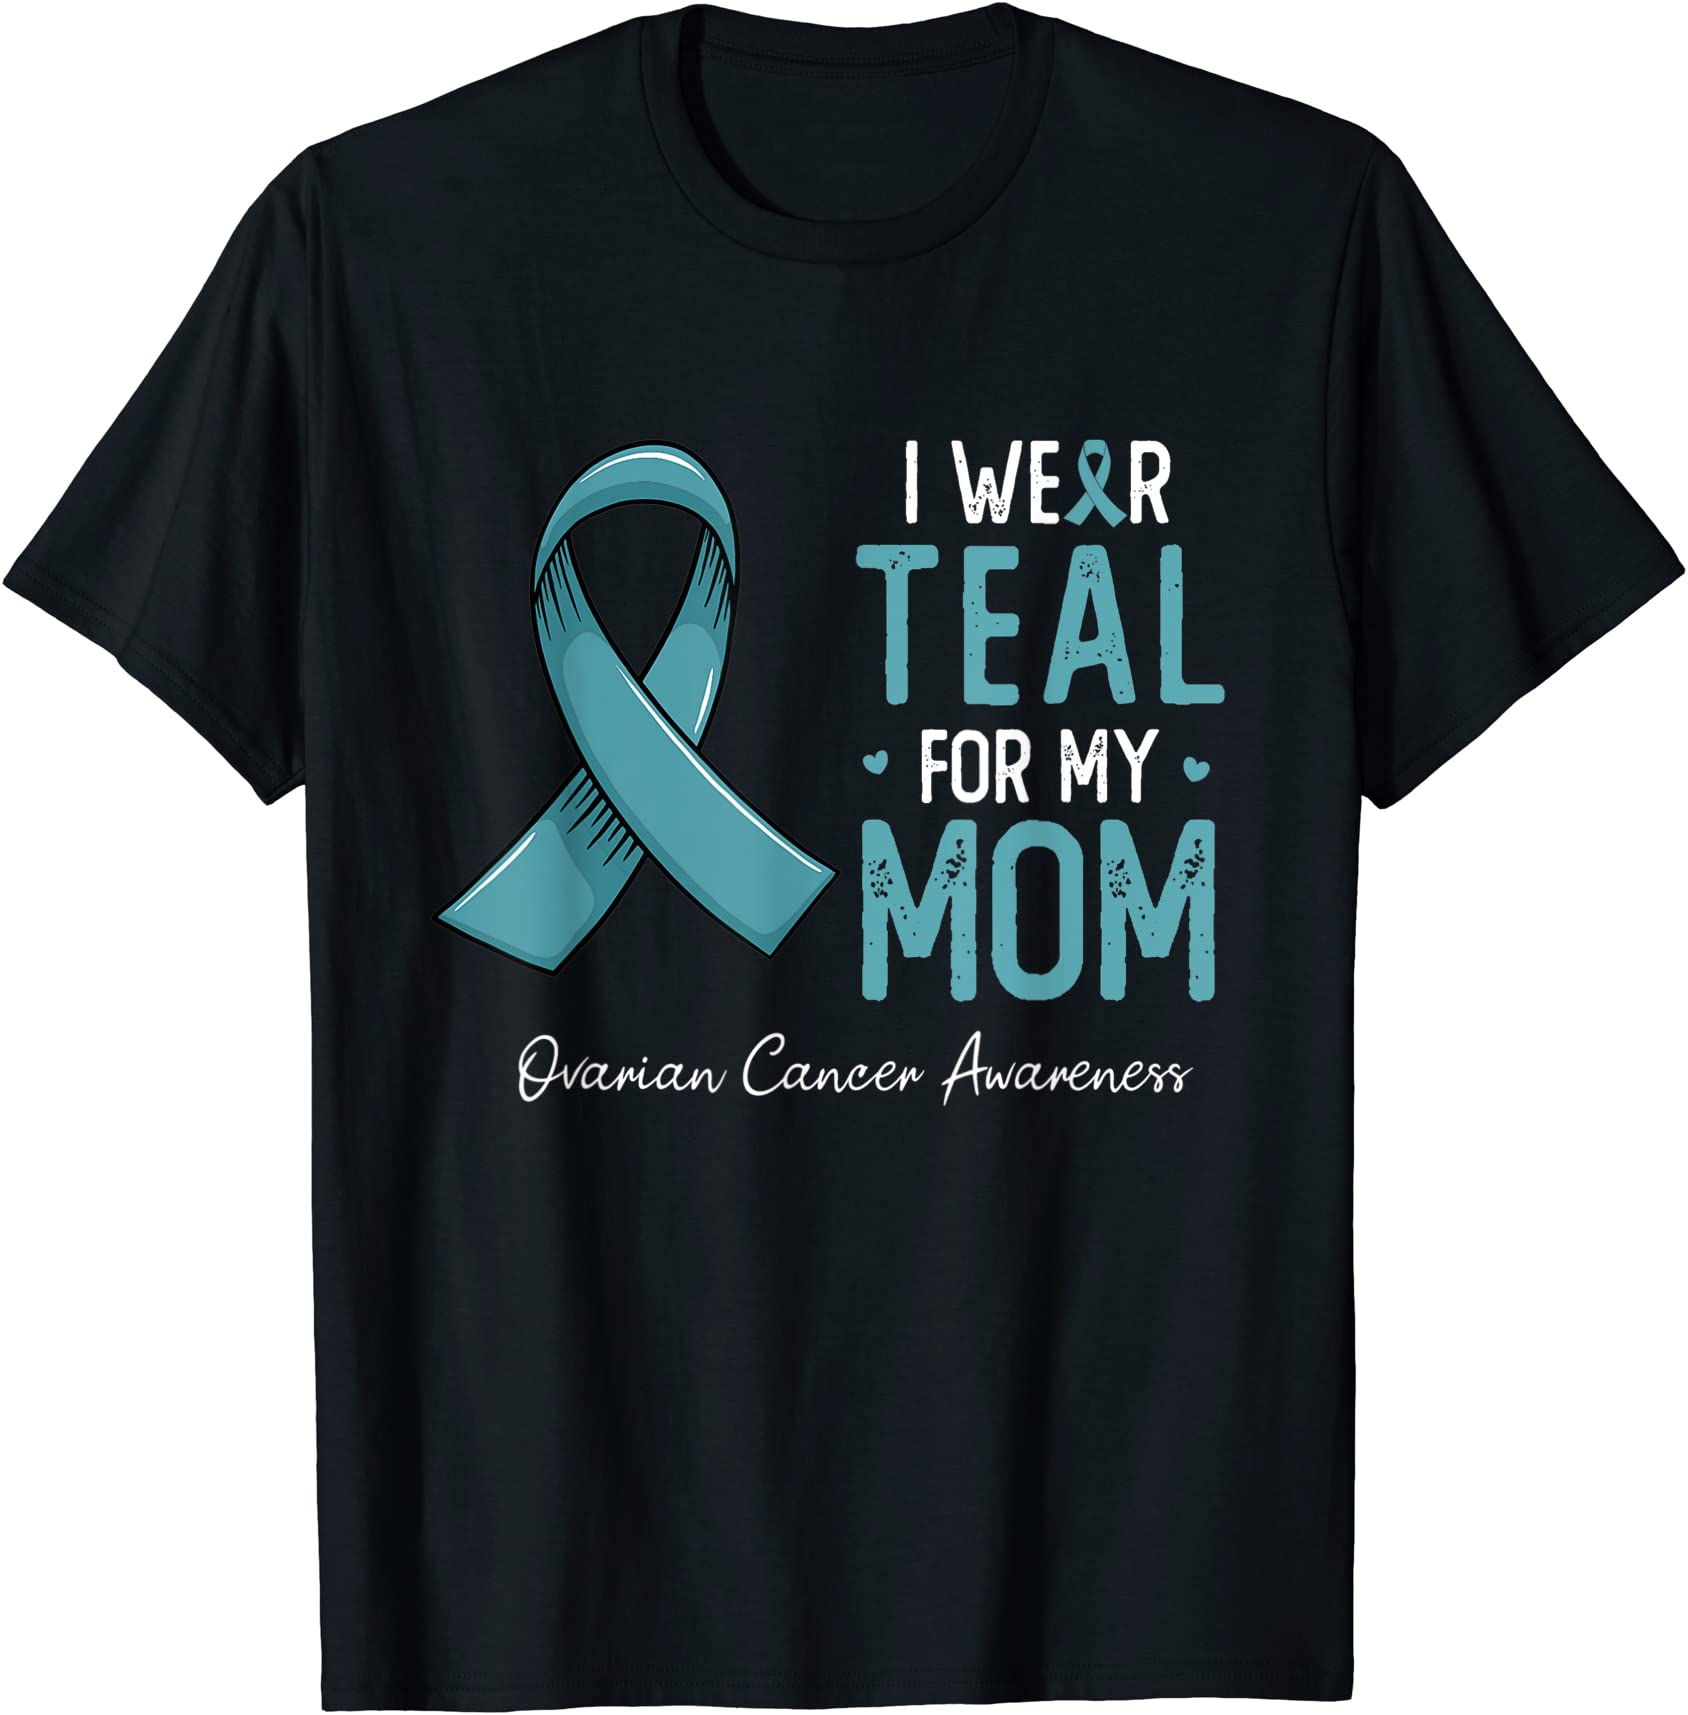 i wear teal for my mom ovarian cancer awareness month t shirt men - Buy ...